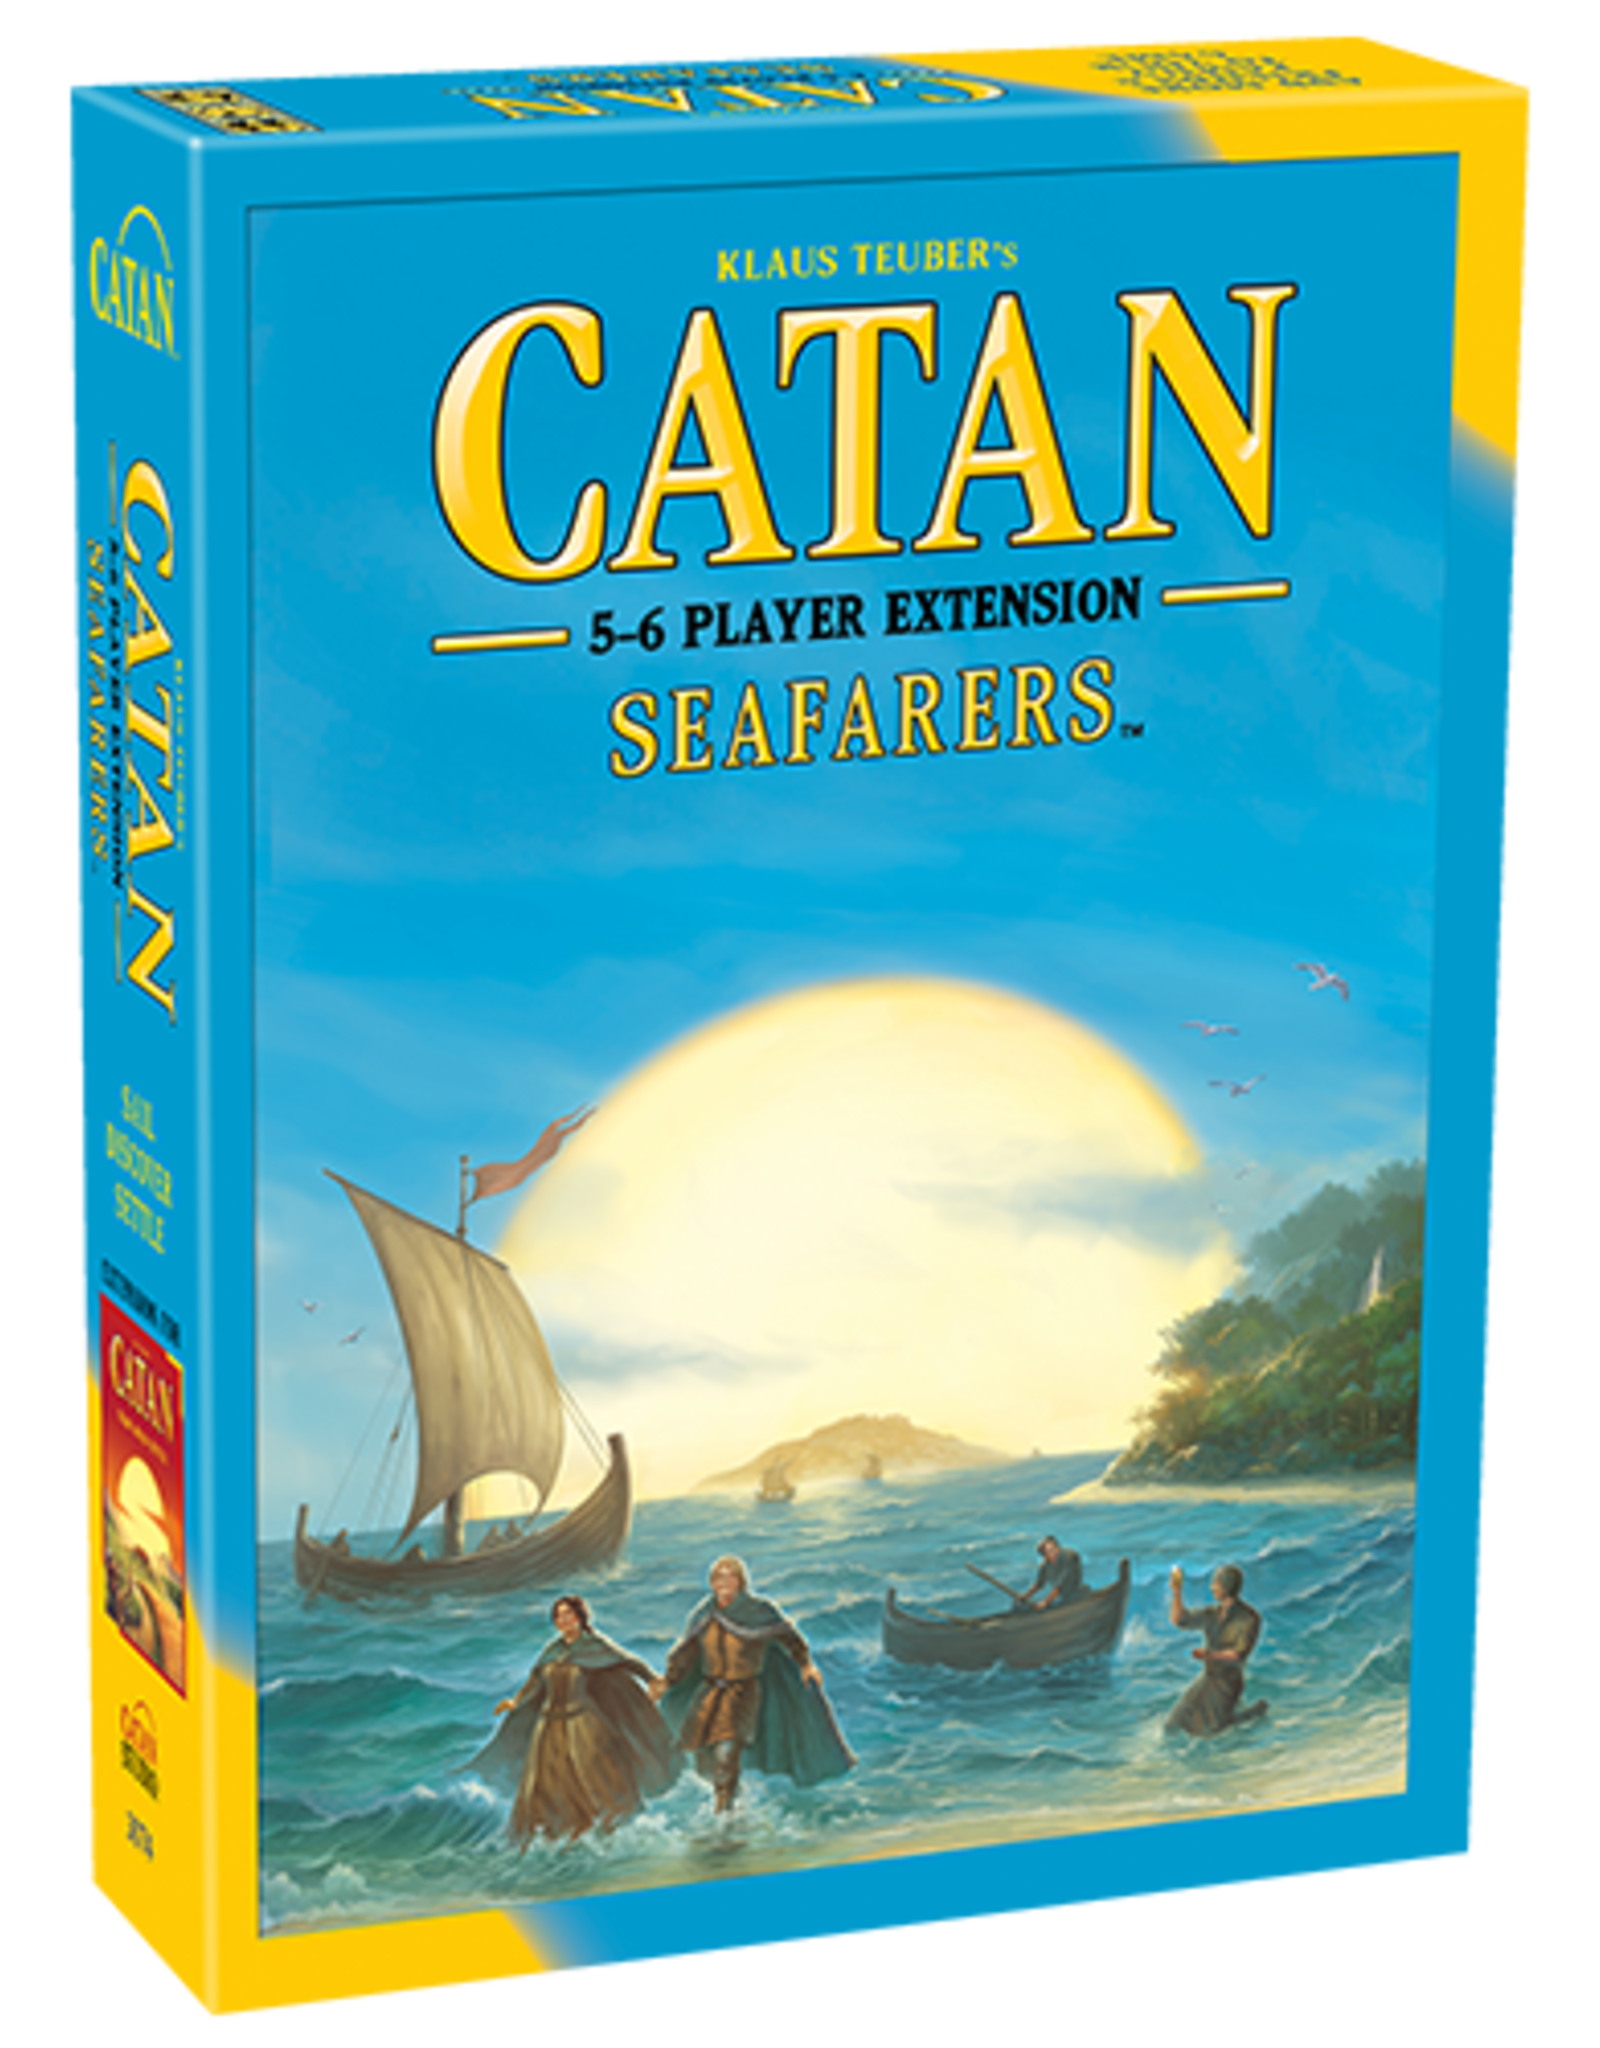 catan seafarers 5-6 player extension